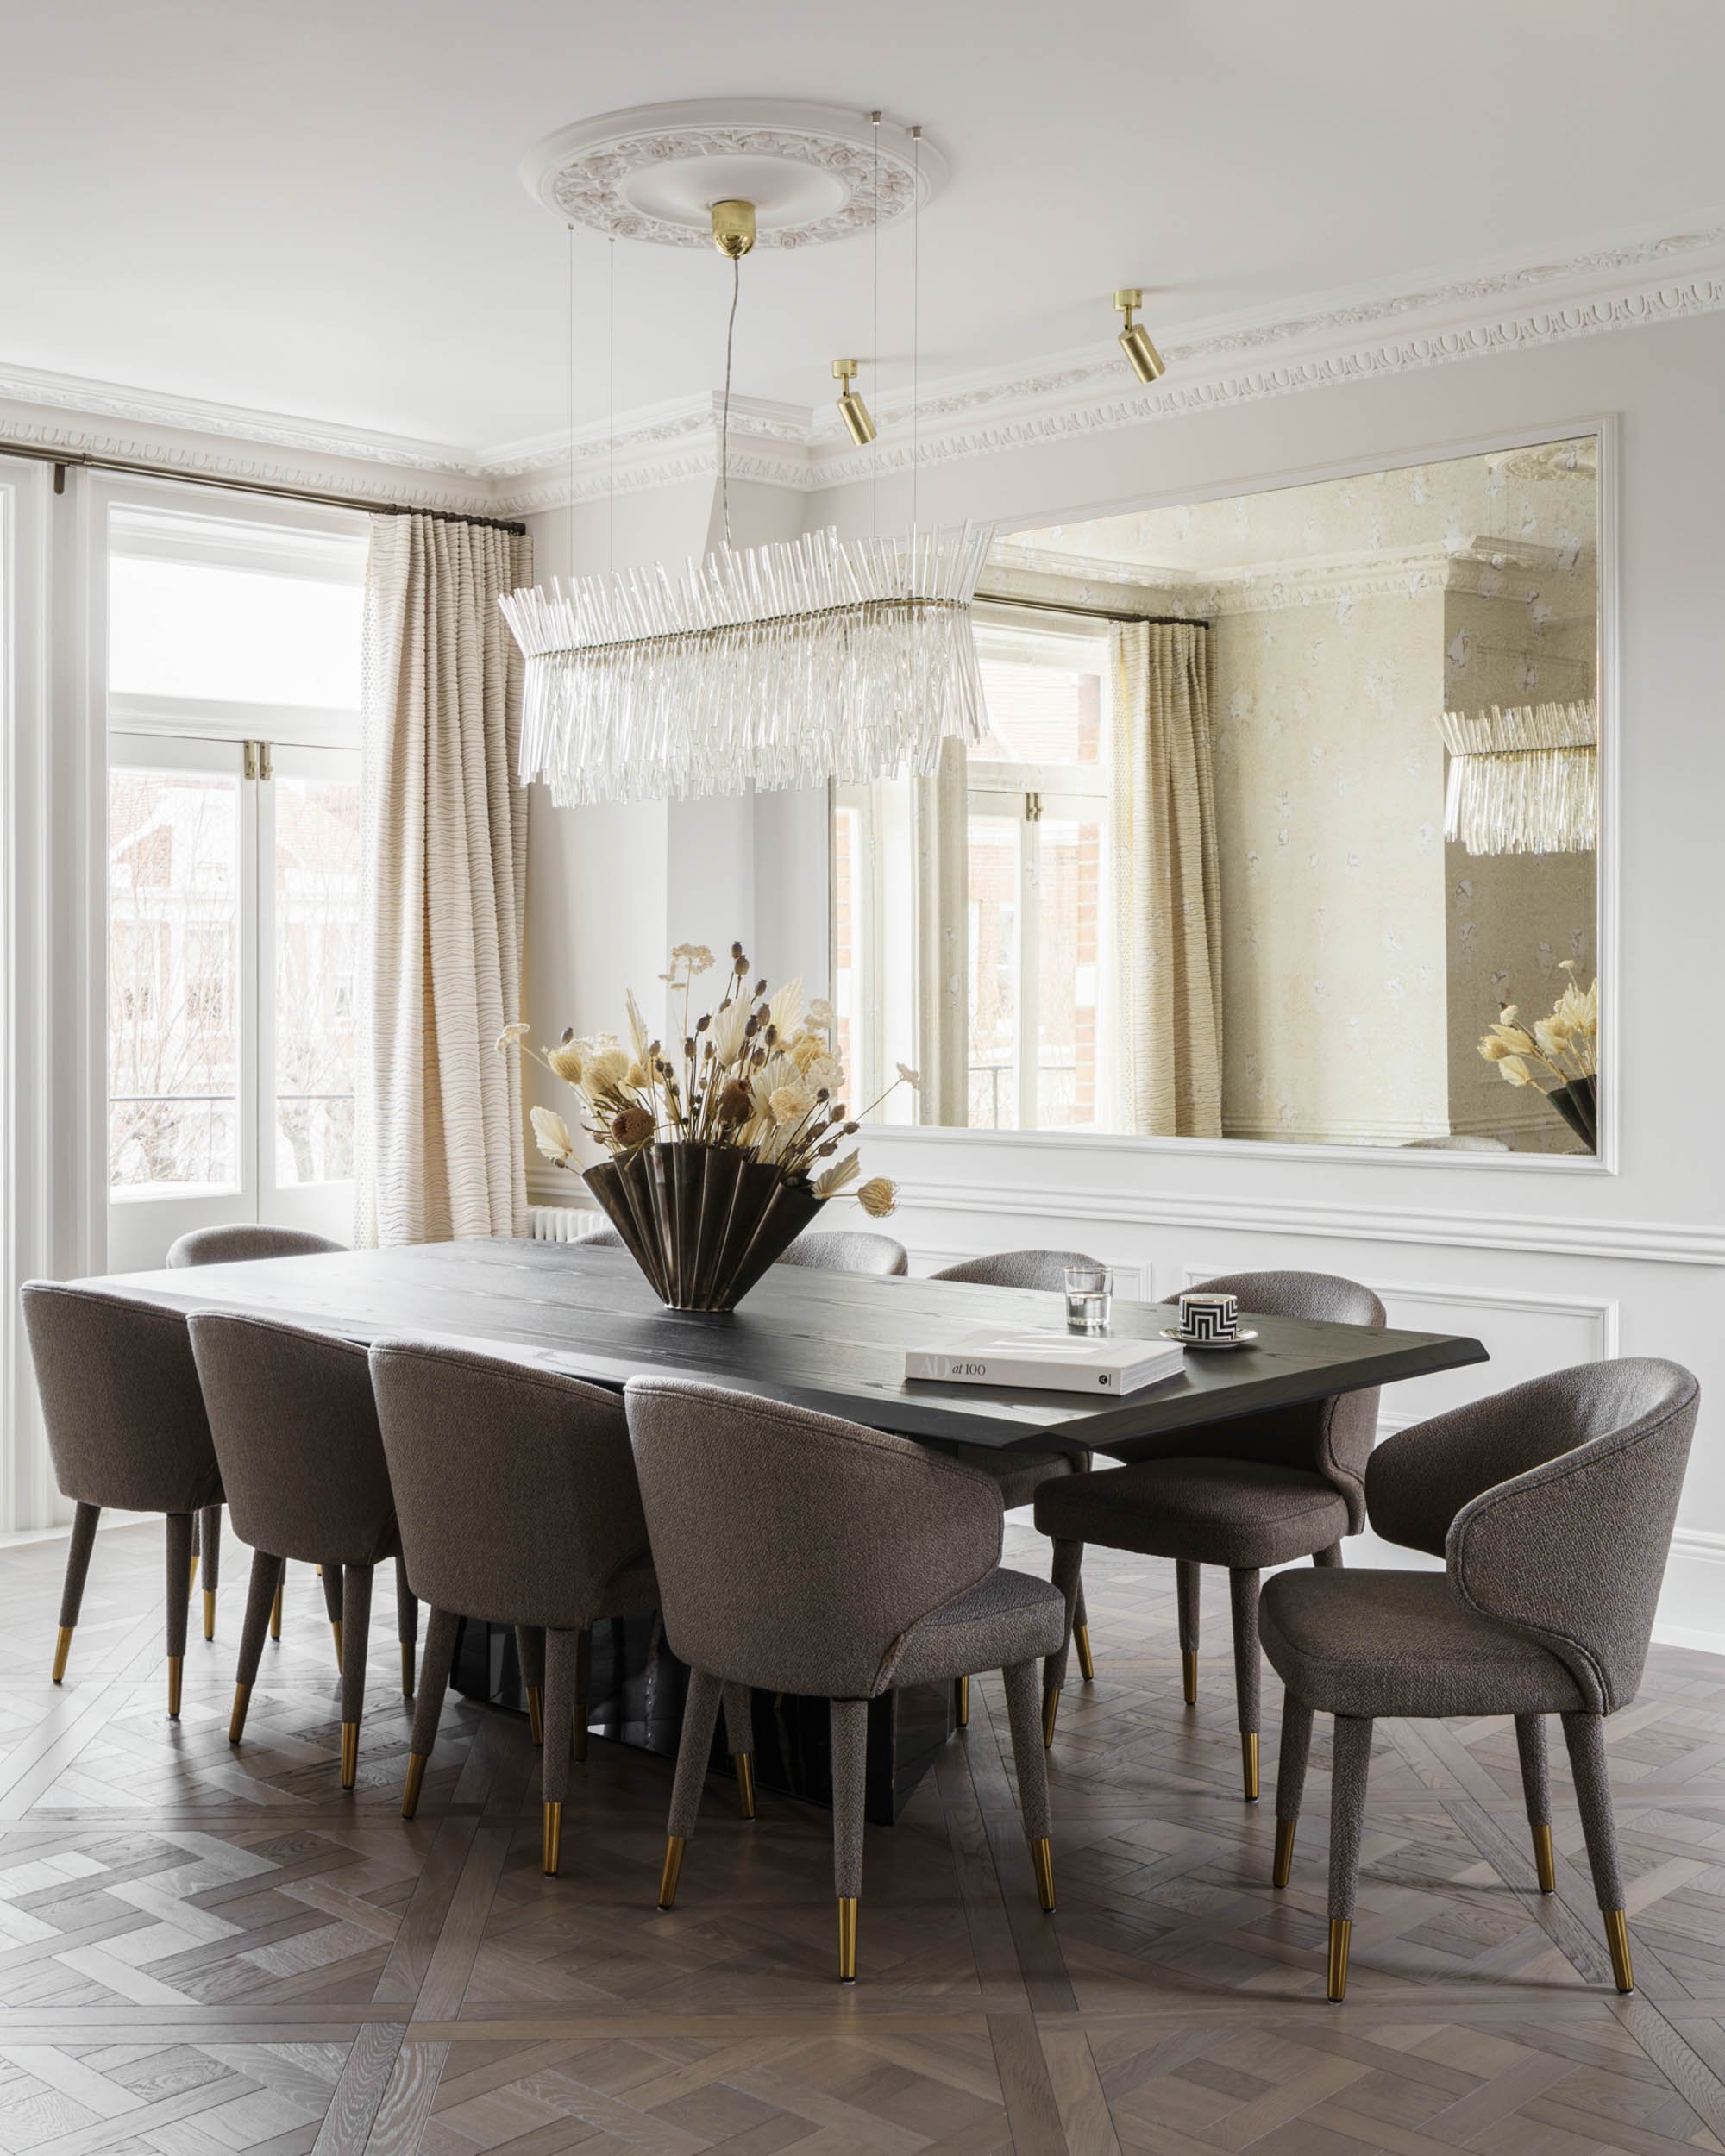 interior-design-parisian-dining-table-setting.jpg